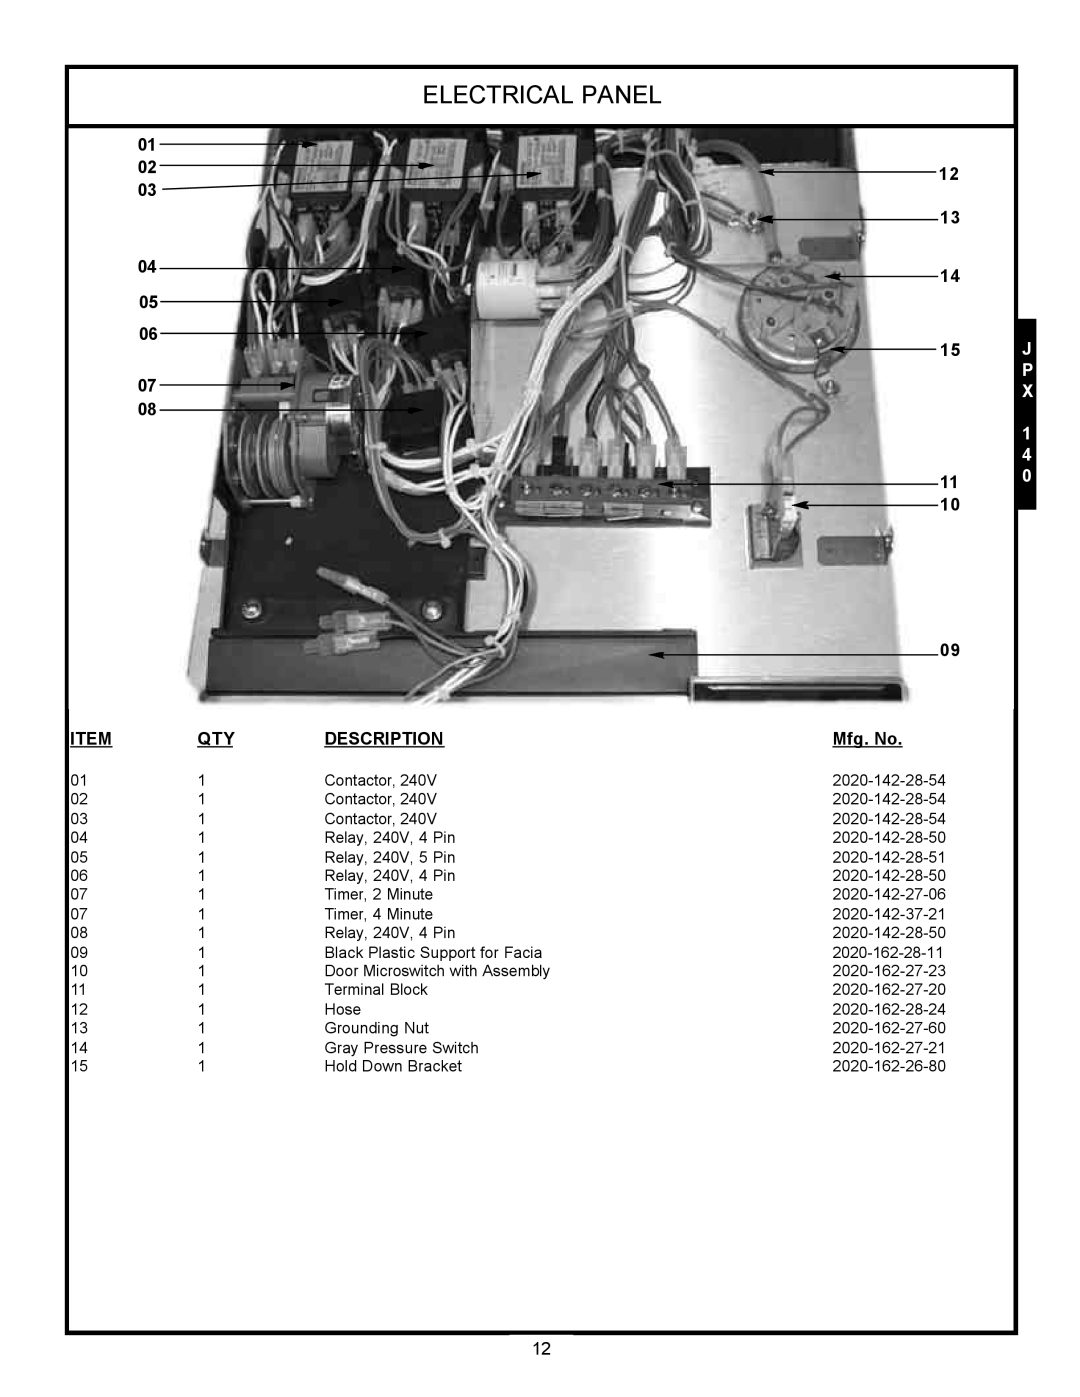 Jackson JPX-200, JPX-160, jpx-140 service manual Electrical Panel, Description, Mfg. No 